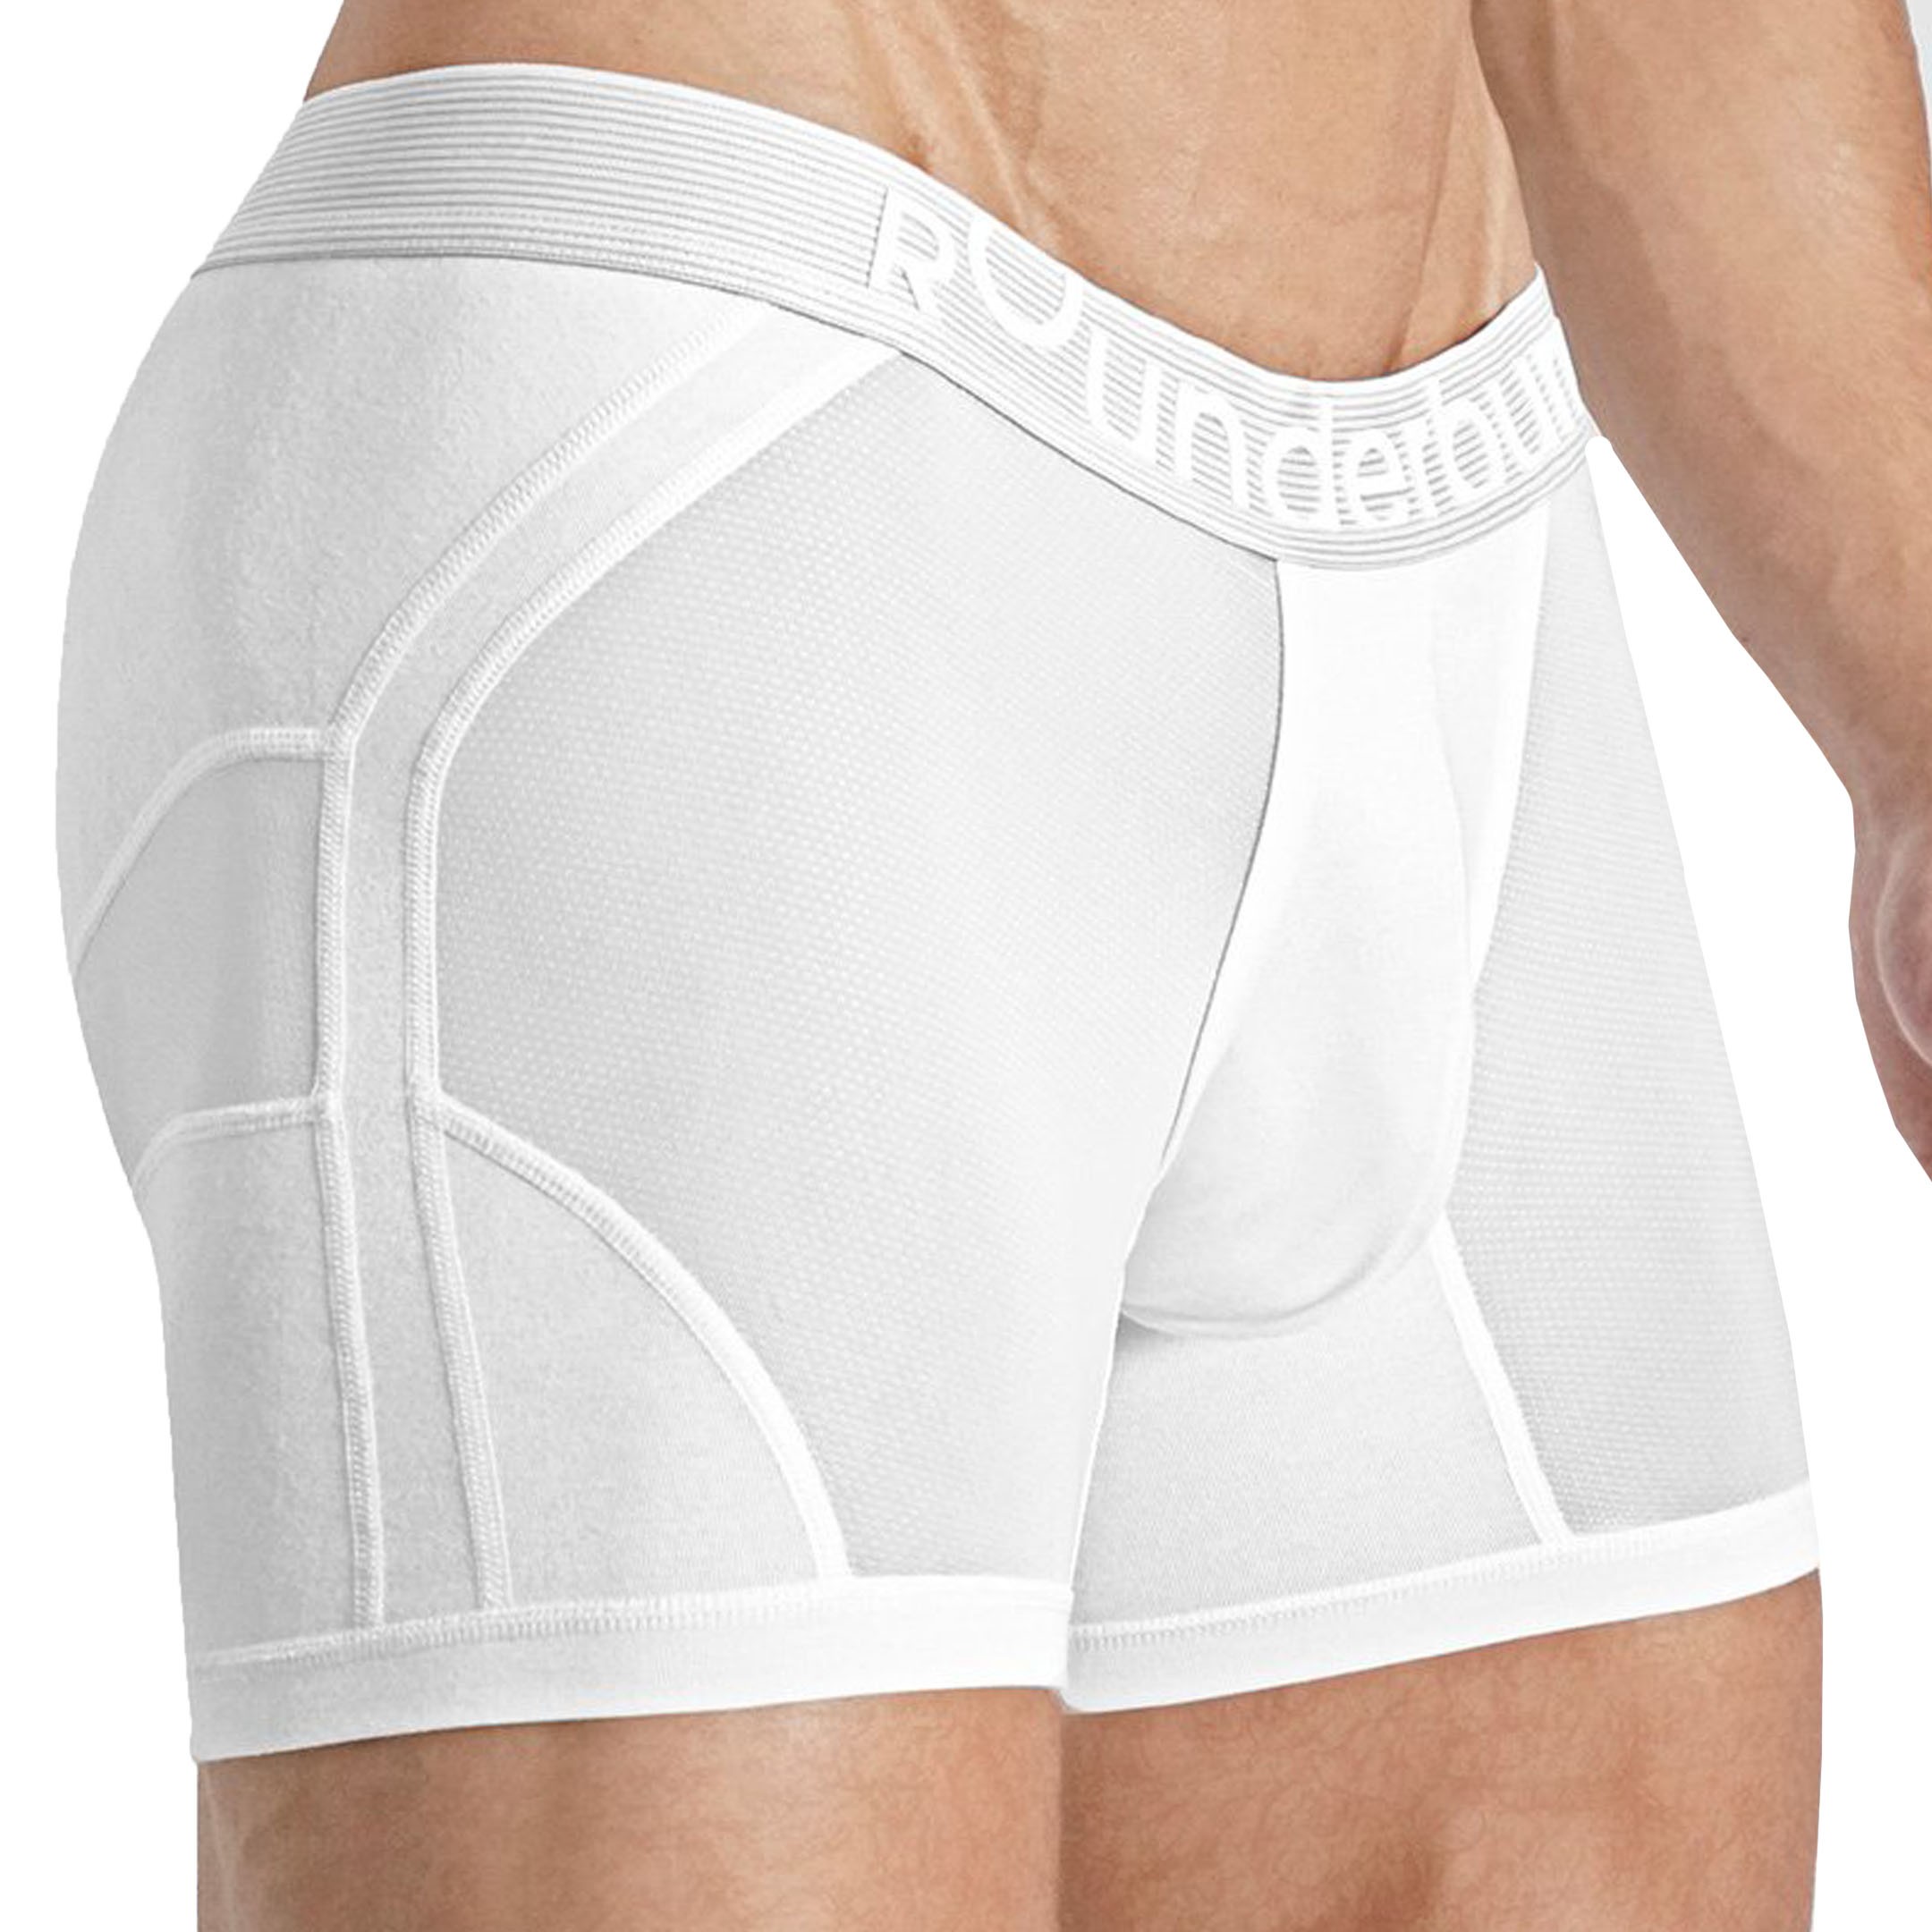 Rounderbum Anatomic Cotton Long Boxer Briefs - White